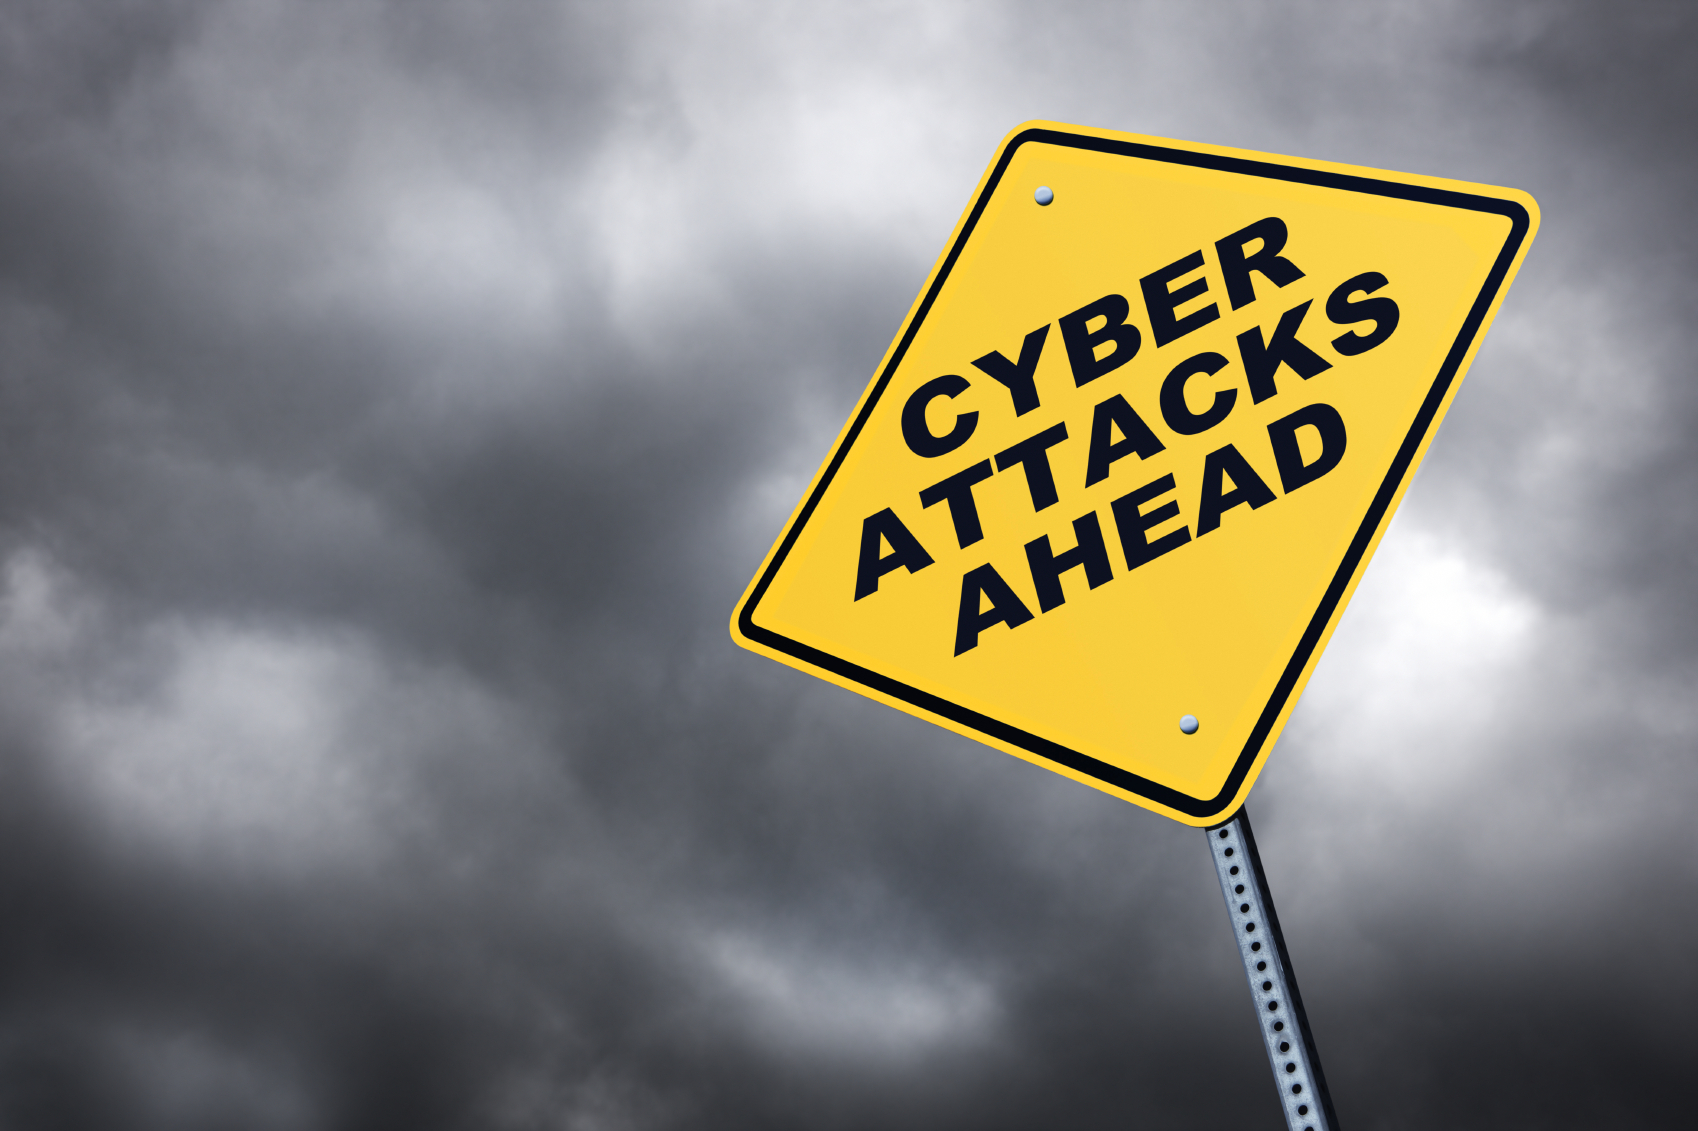 cyber attacks ahead